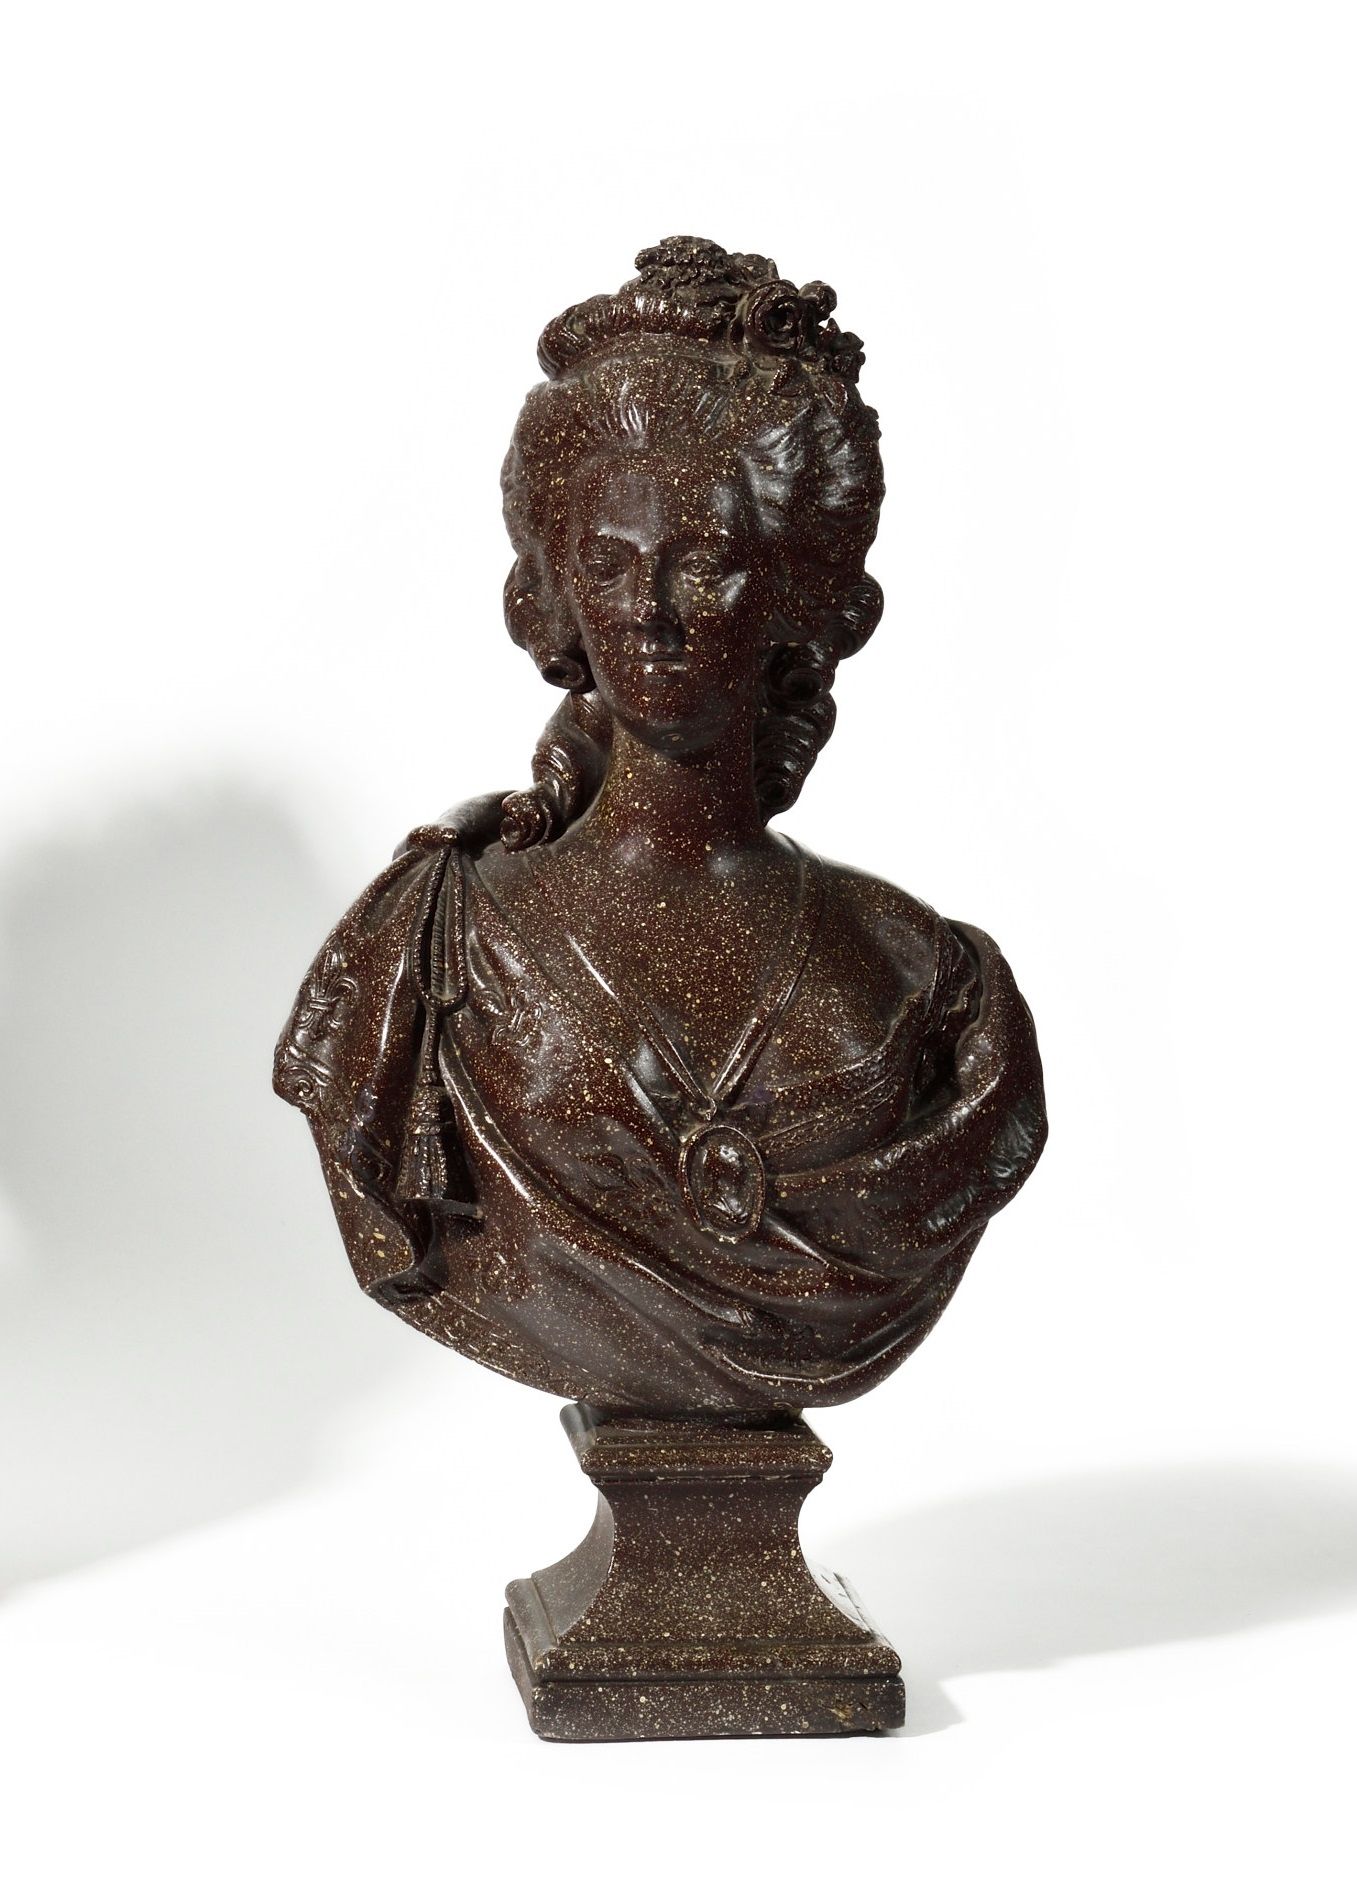 Null Nach Félix LECOMTE (1737-1817) 
Marie Antoinette mit einem Medaillon, das L&hellip;